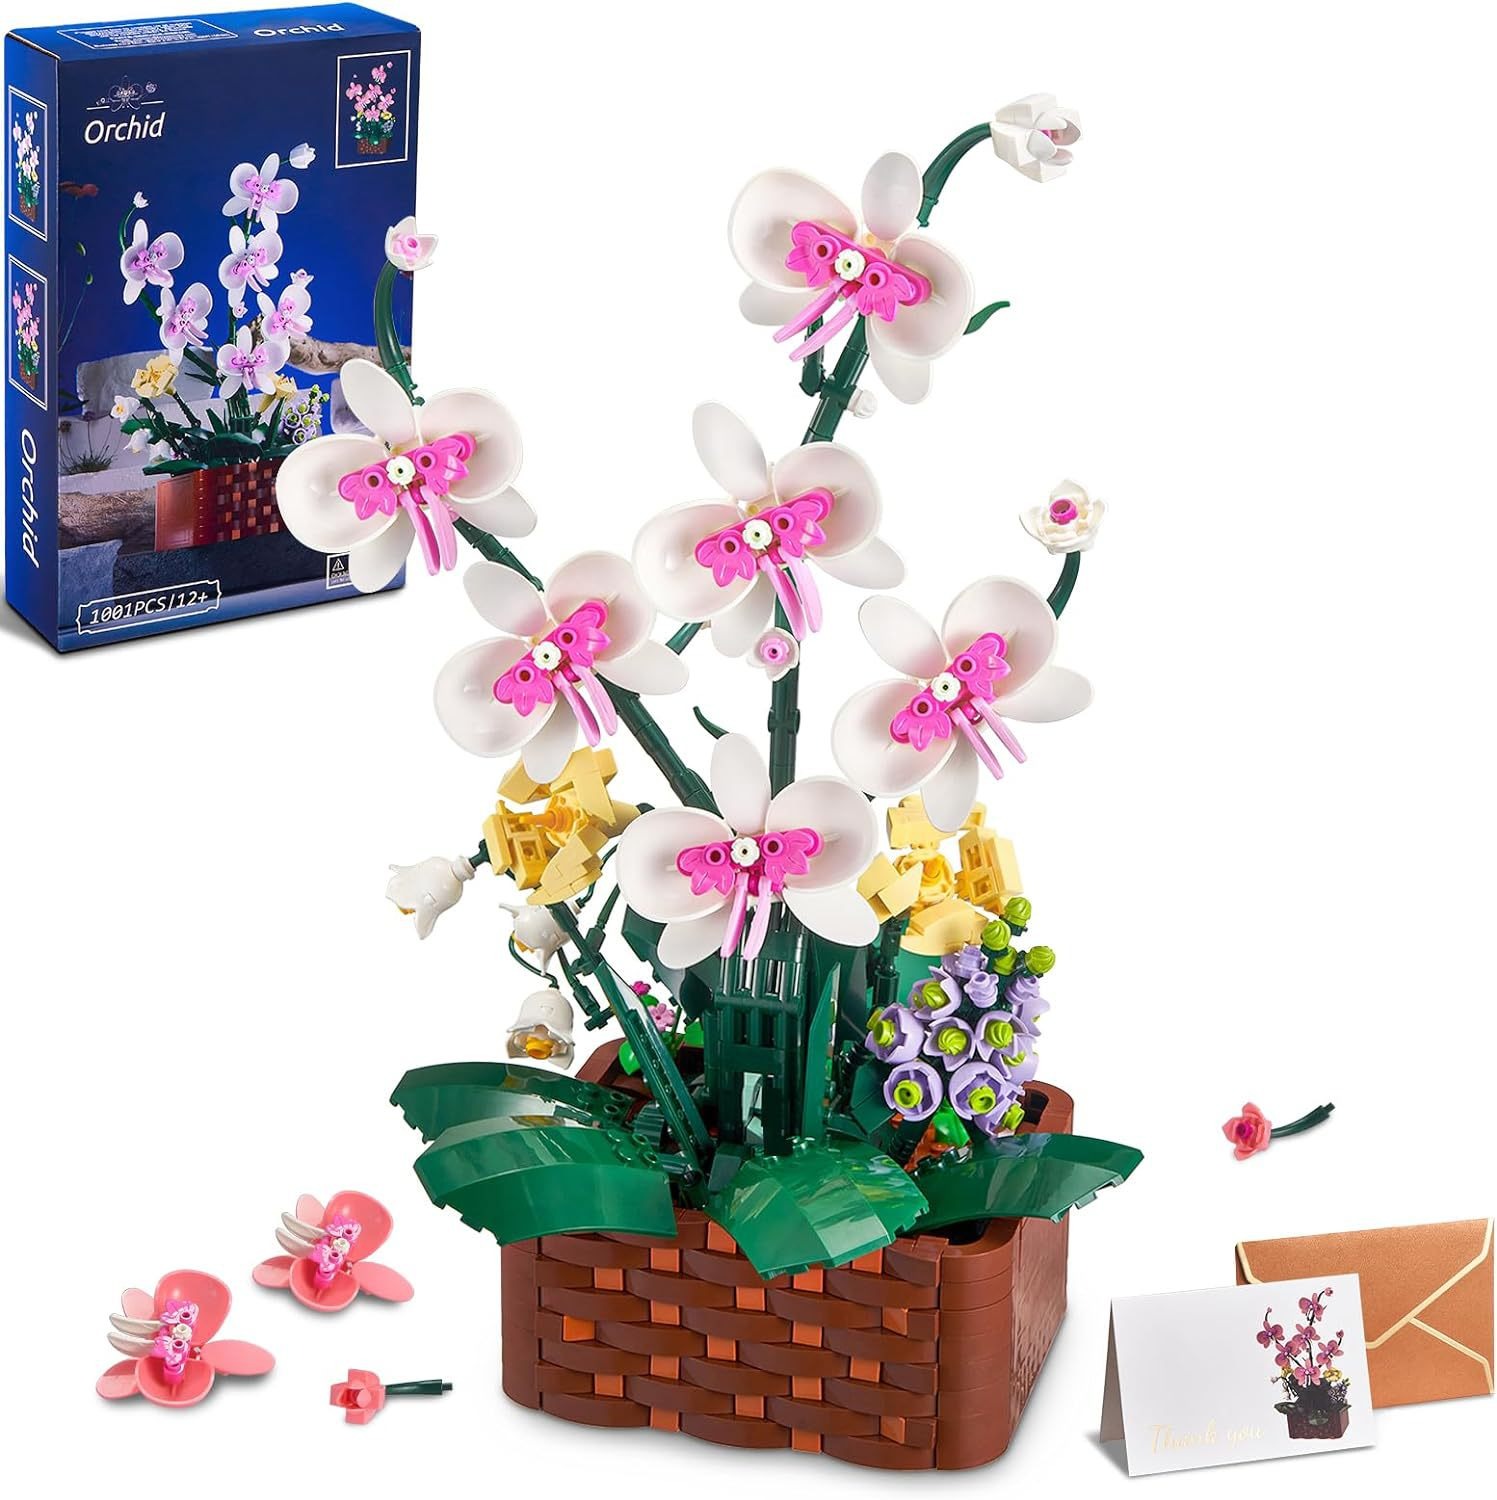 Custom 92202 Orchid 2